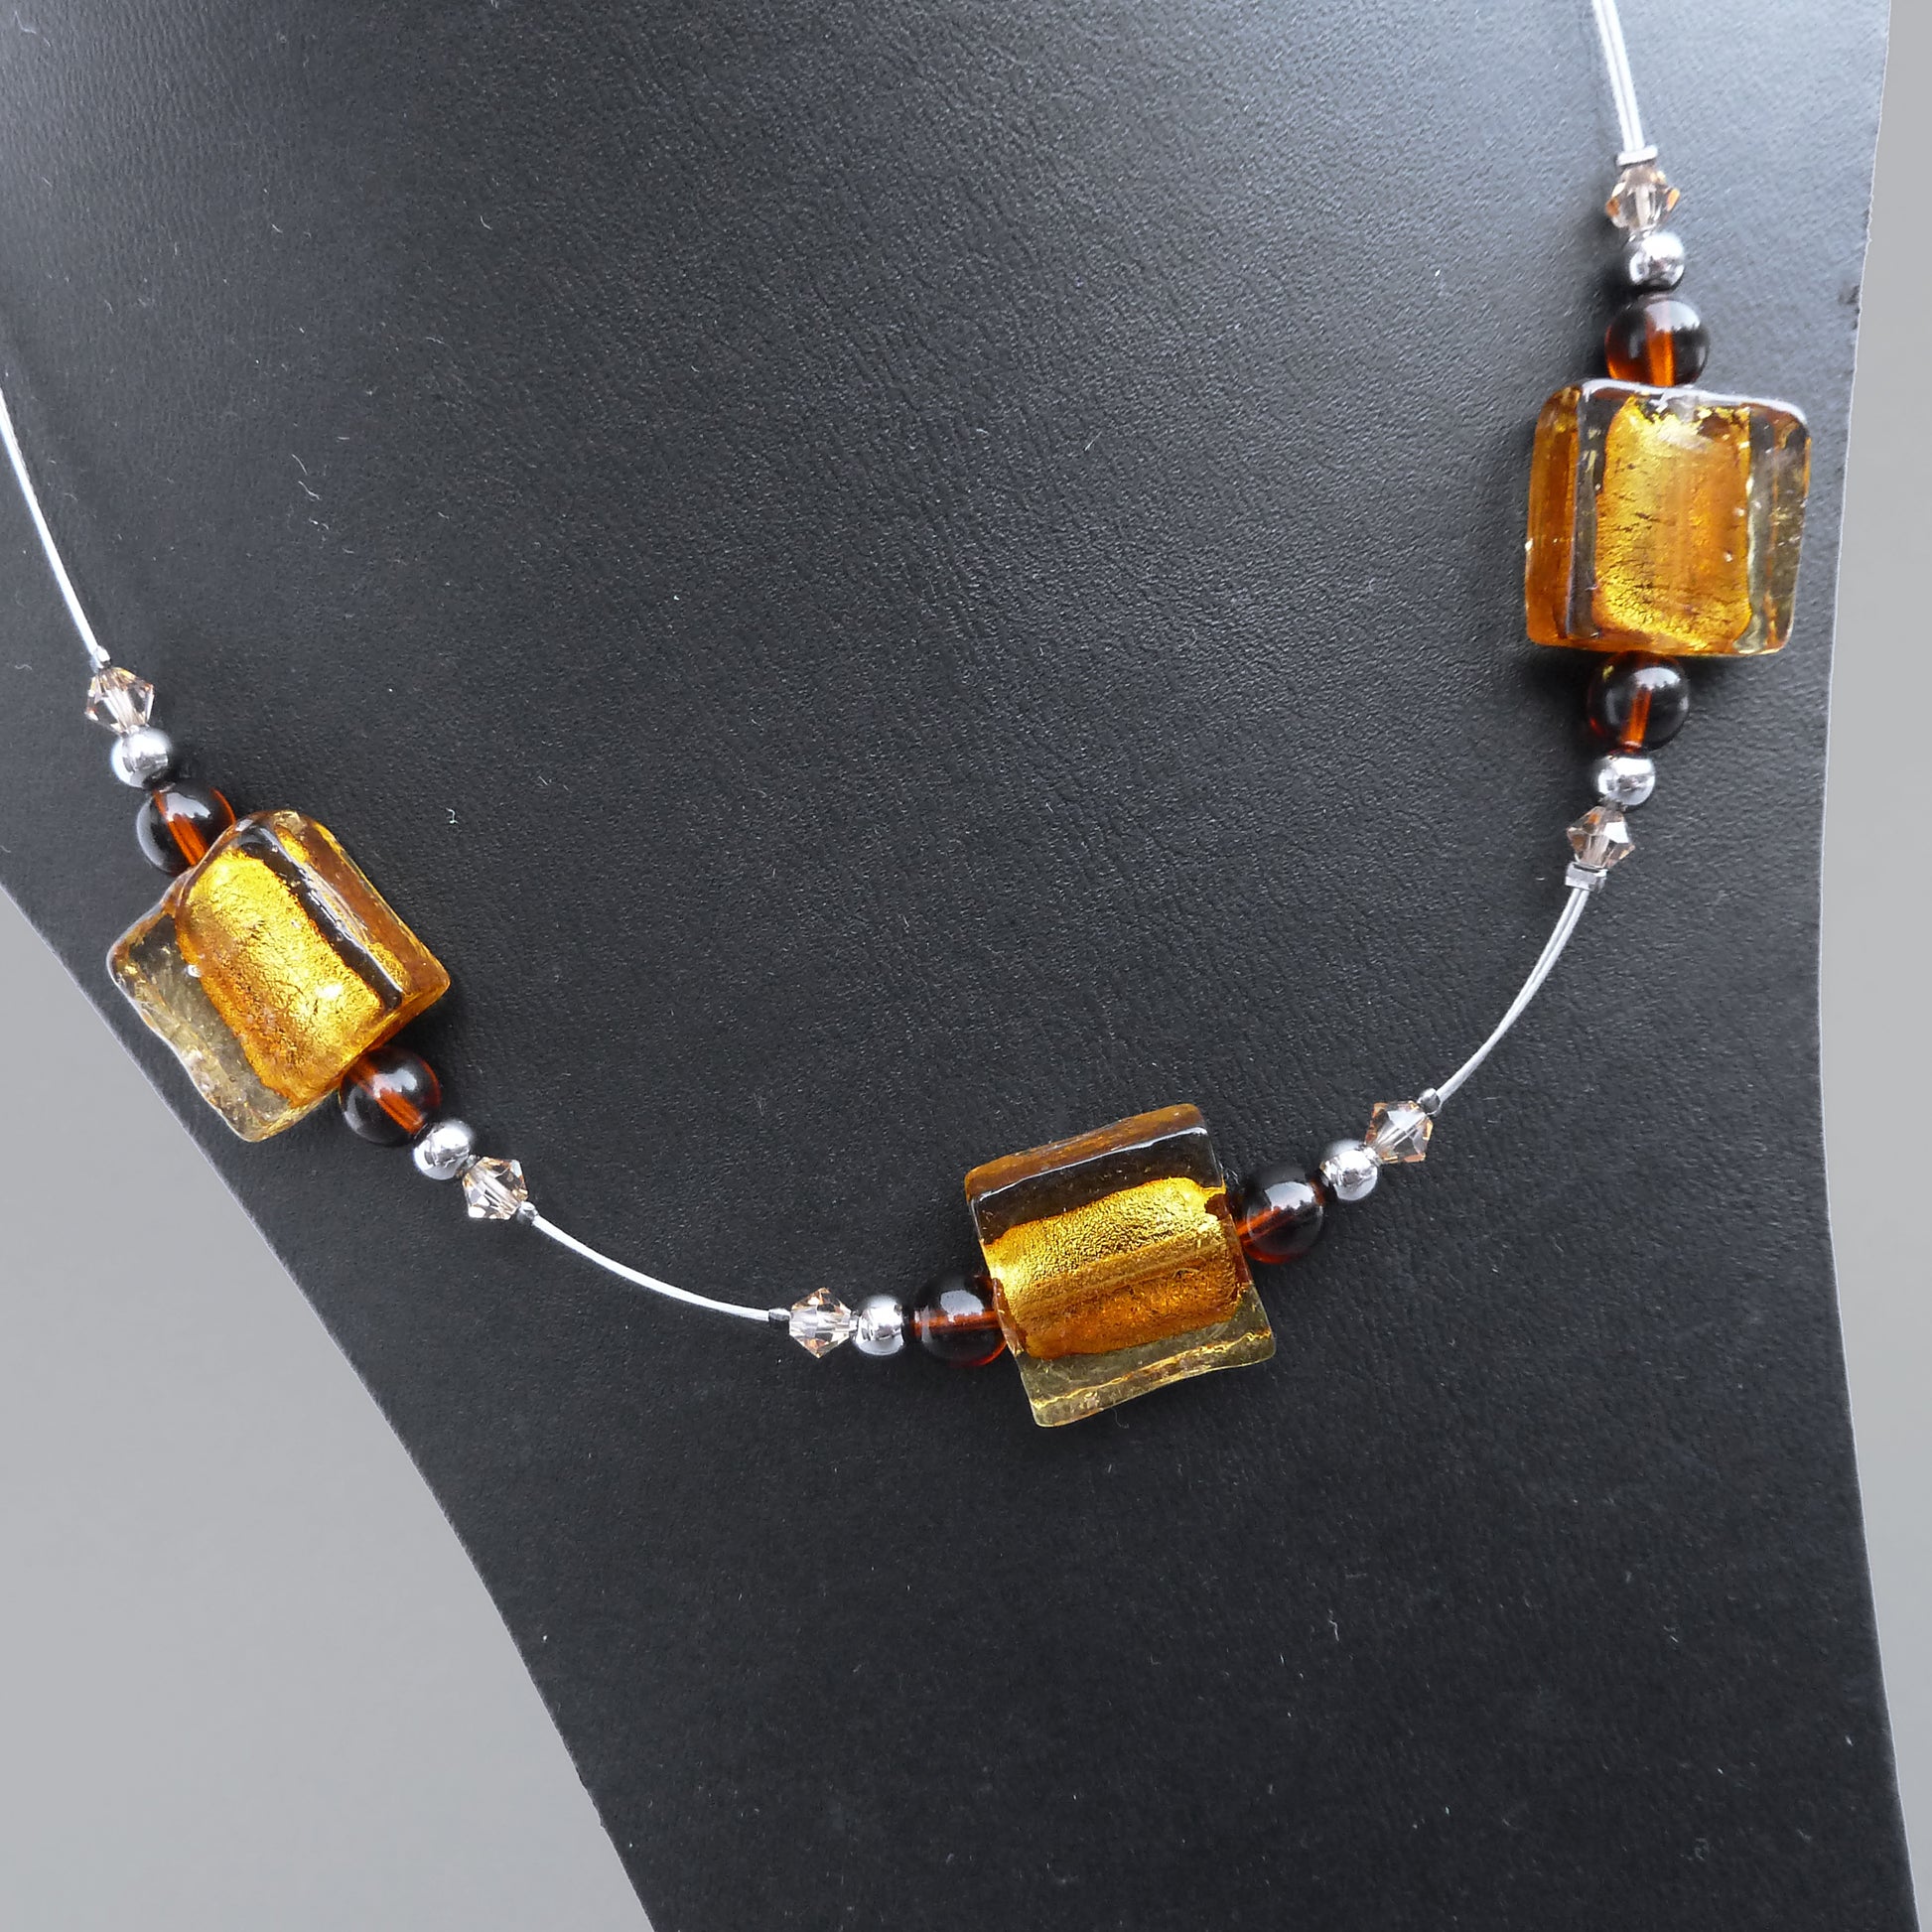 Mustard glass bead necklace